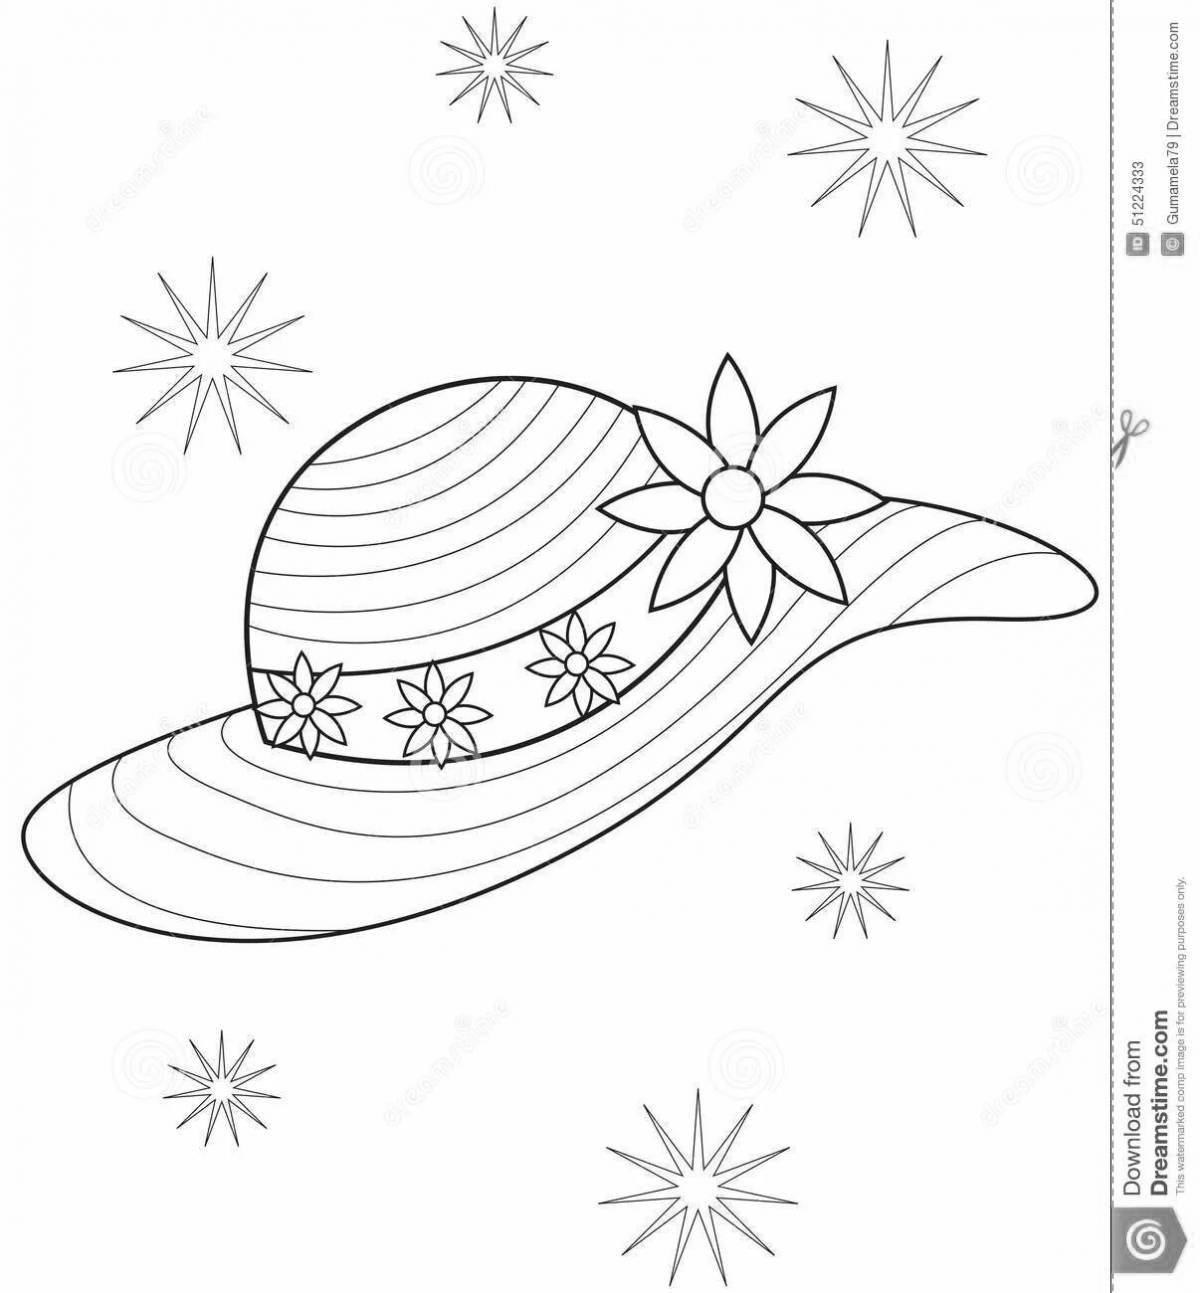 Joyful hat coloring book for kids